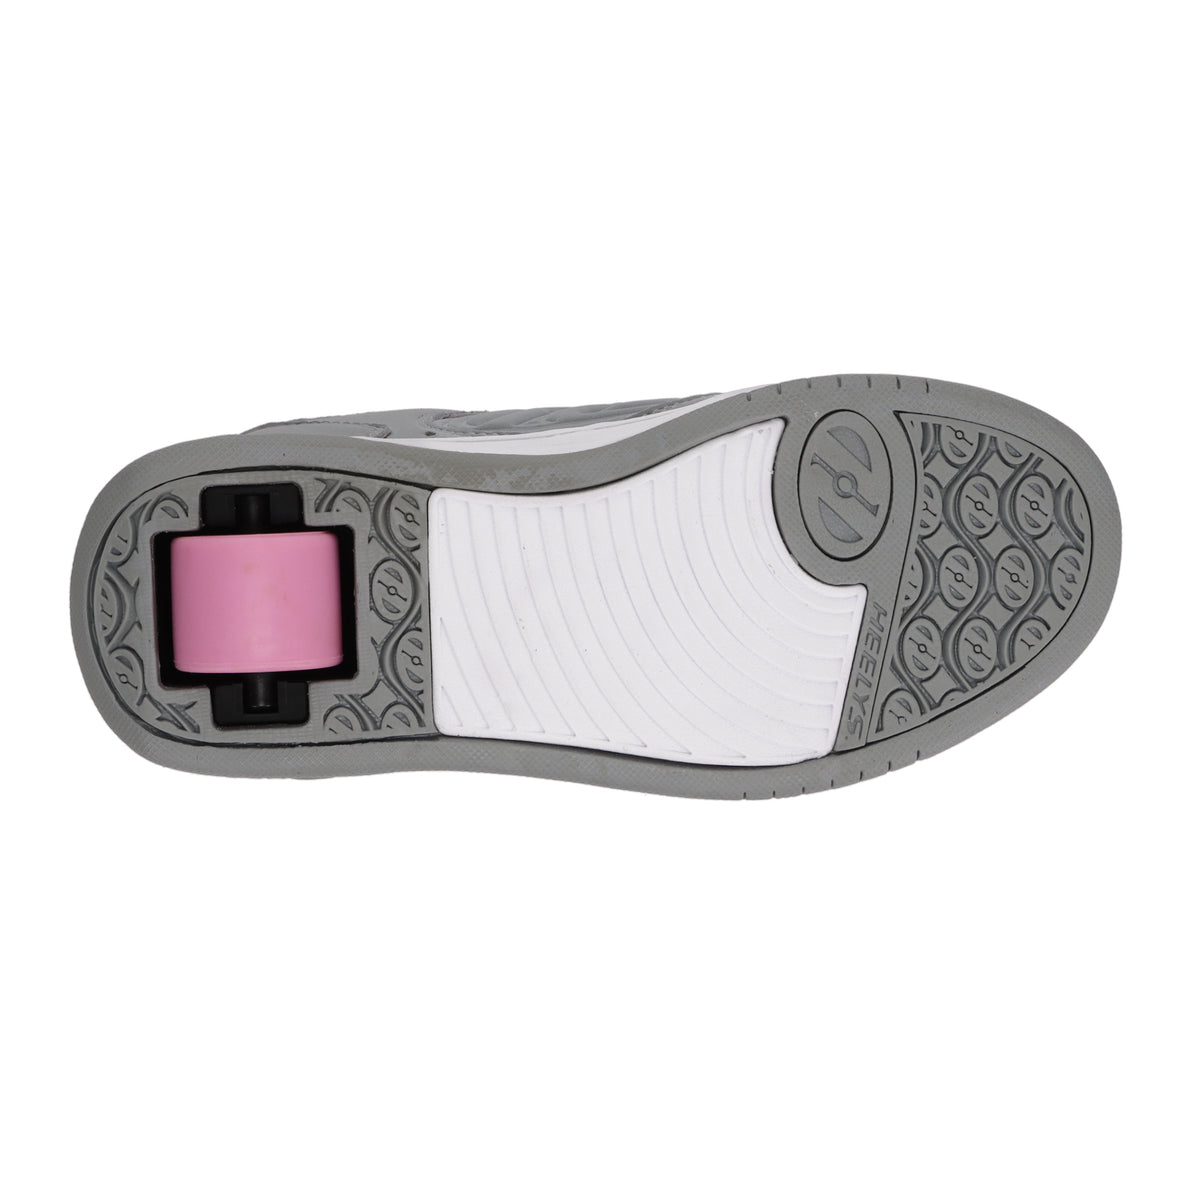 grey and pink heelys